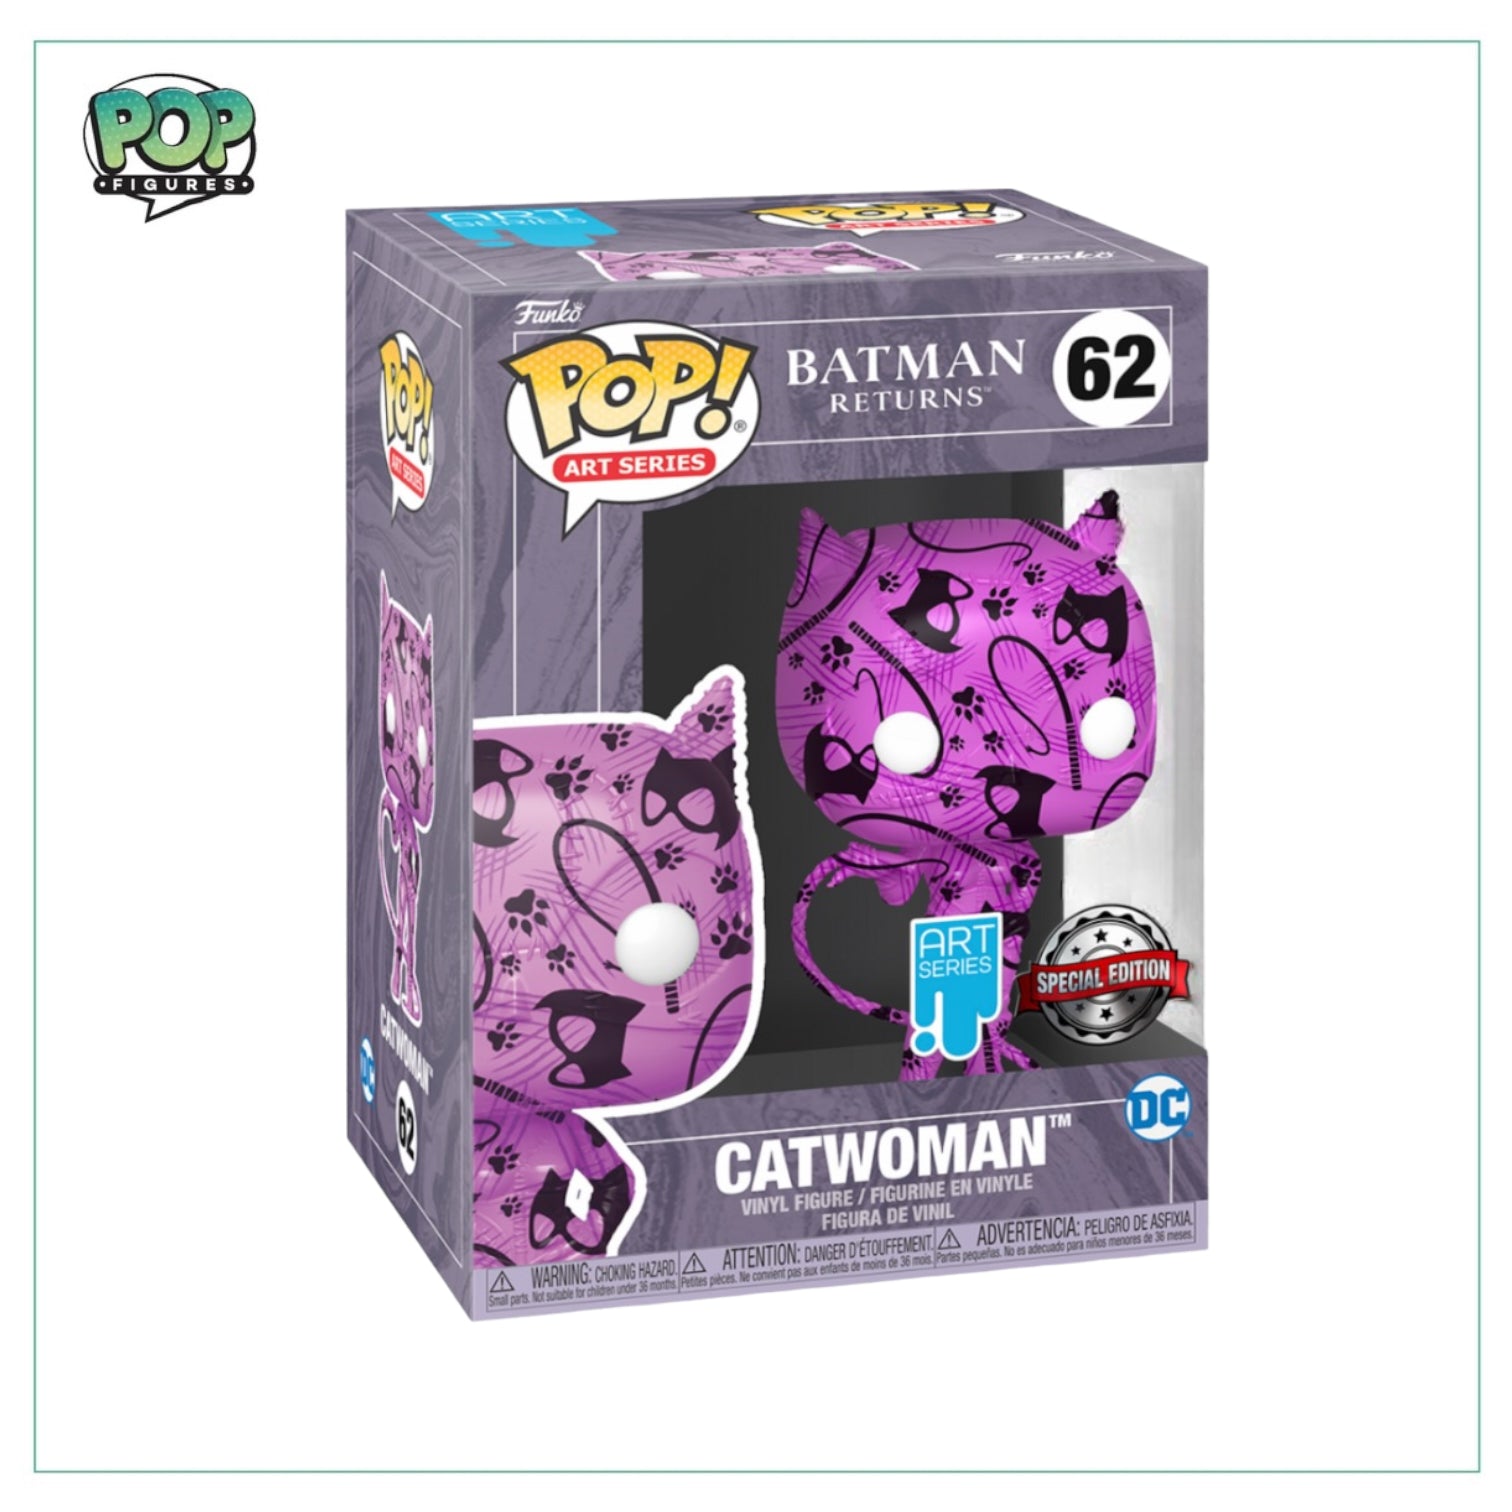 Catwoman #62 (Art Series) Funko Pop! - Batman Returns - Special Edition